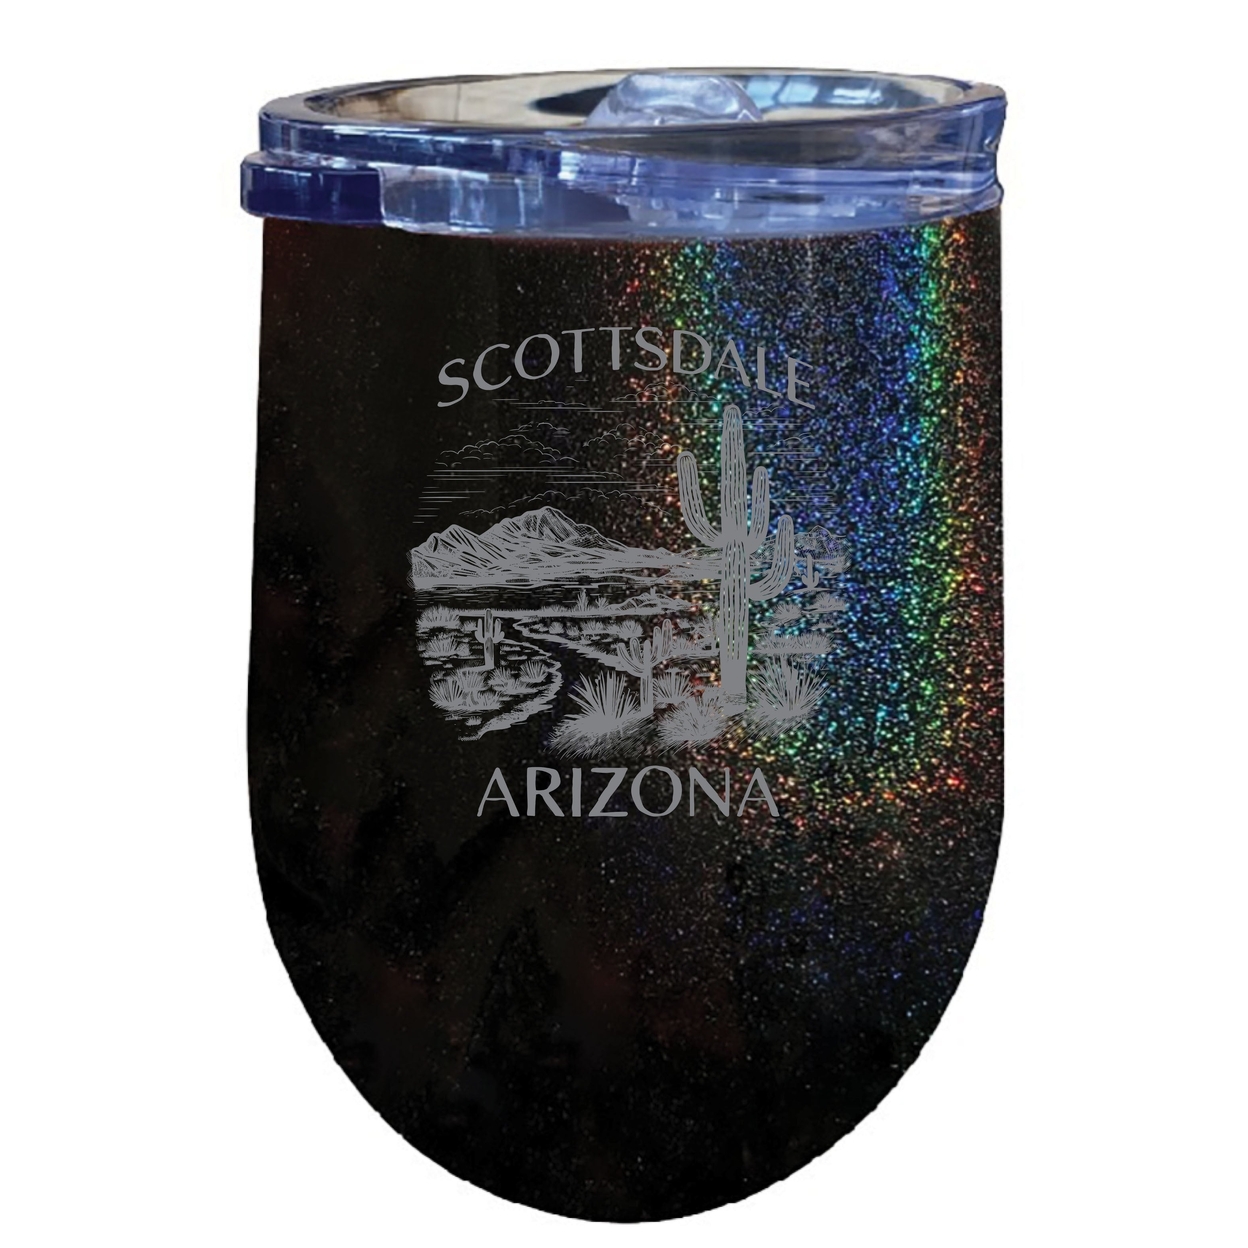 Scottsdale Arizona Souvenir 12 Oz Engraved Insulated Wine Stainless Steel Tumbler - Rose Gold,,Single Unit